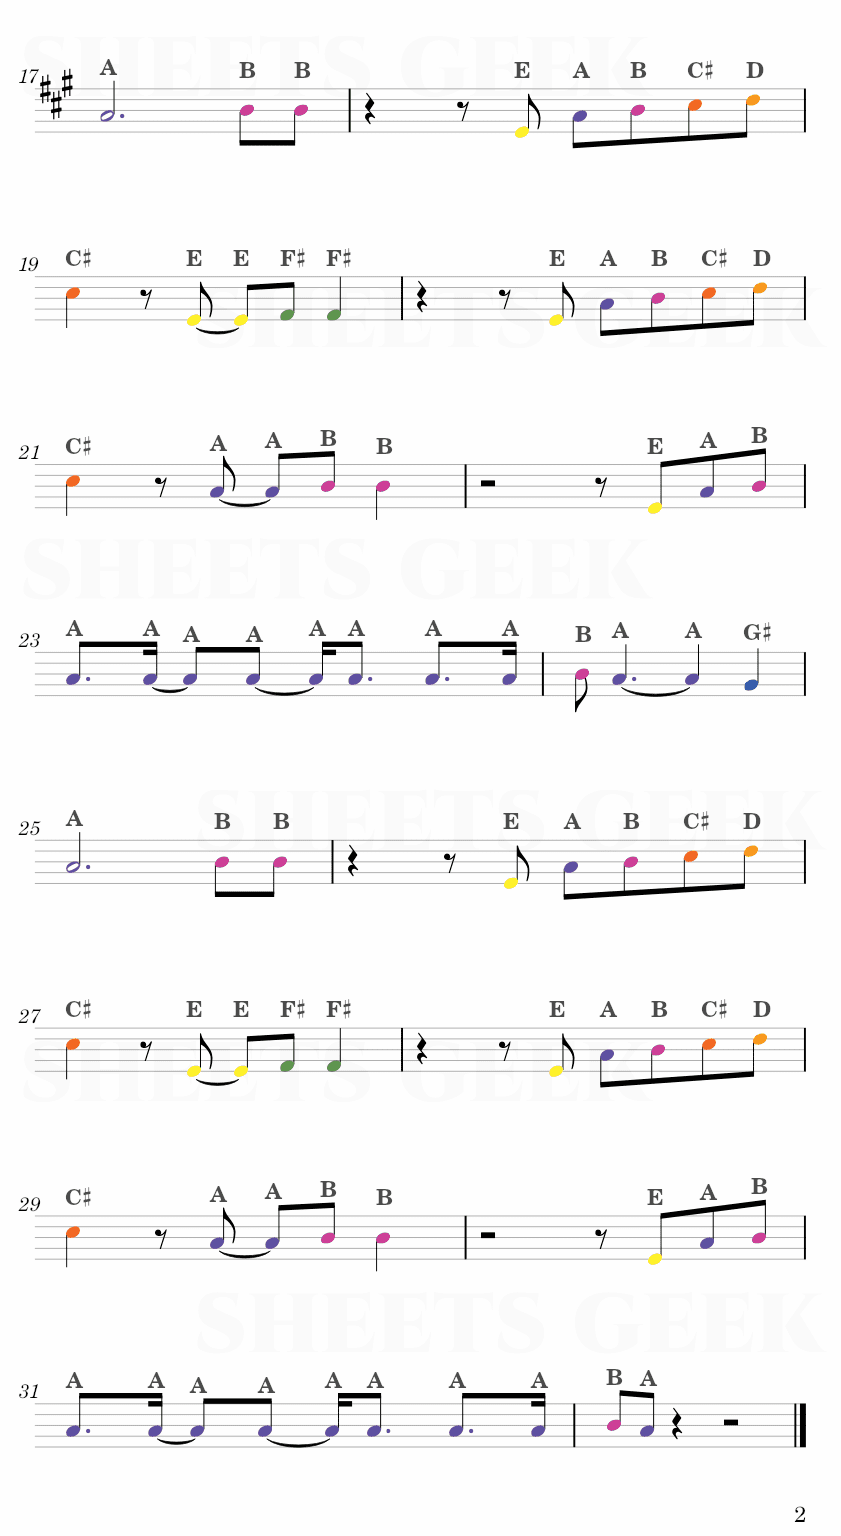 Euphoria - Loreen Easy Sheet Music Free for piano, keyboard, flute, violin, sax, cello page 2